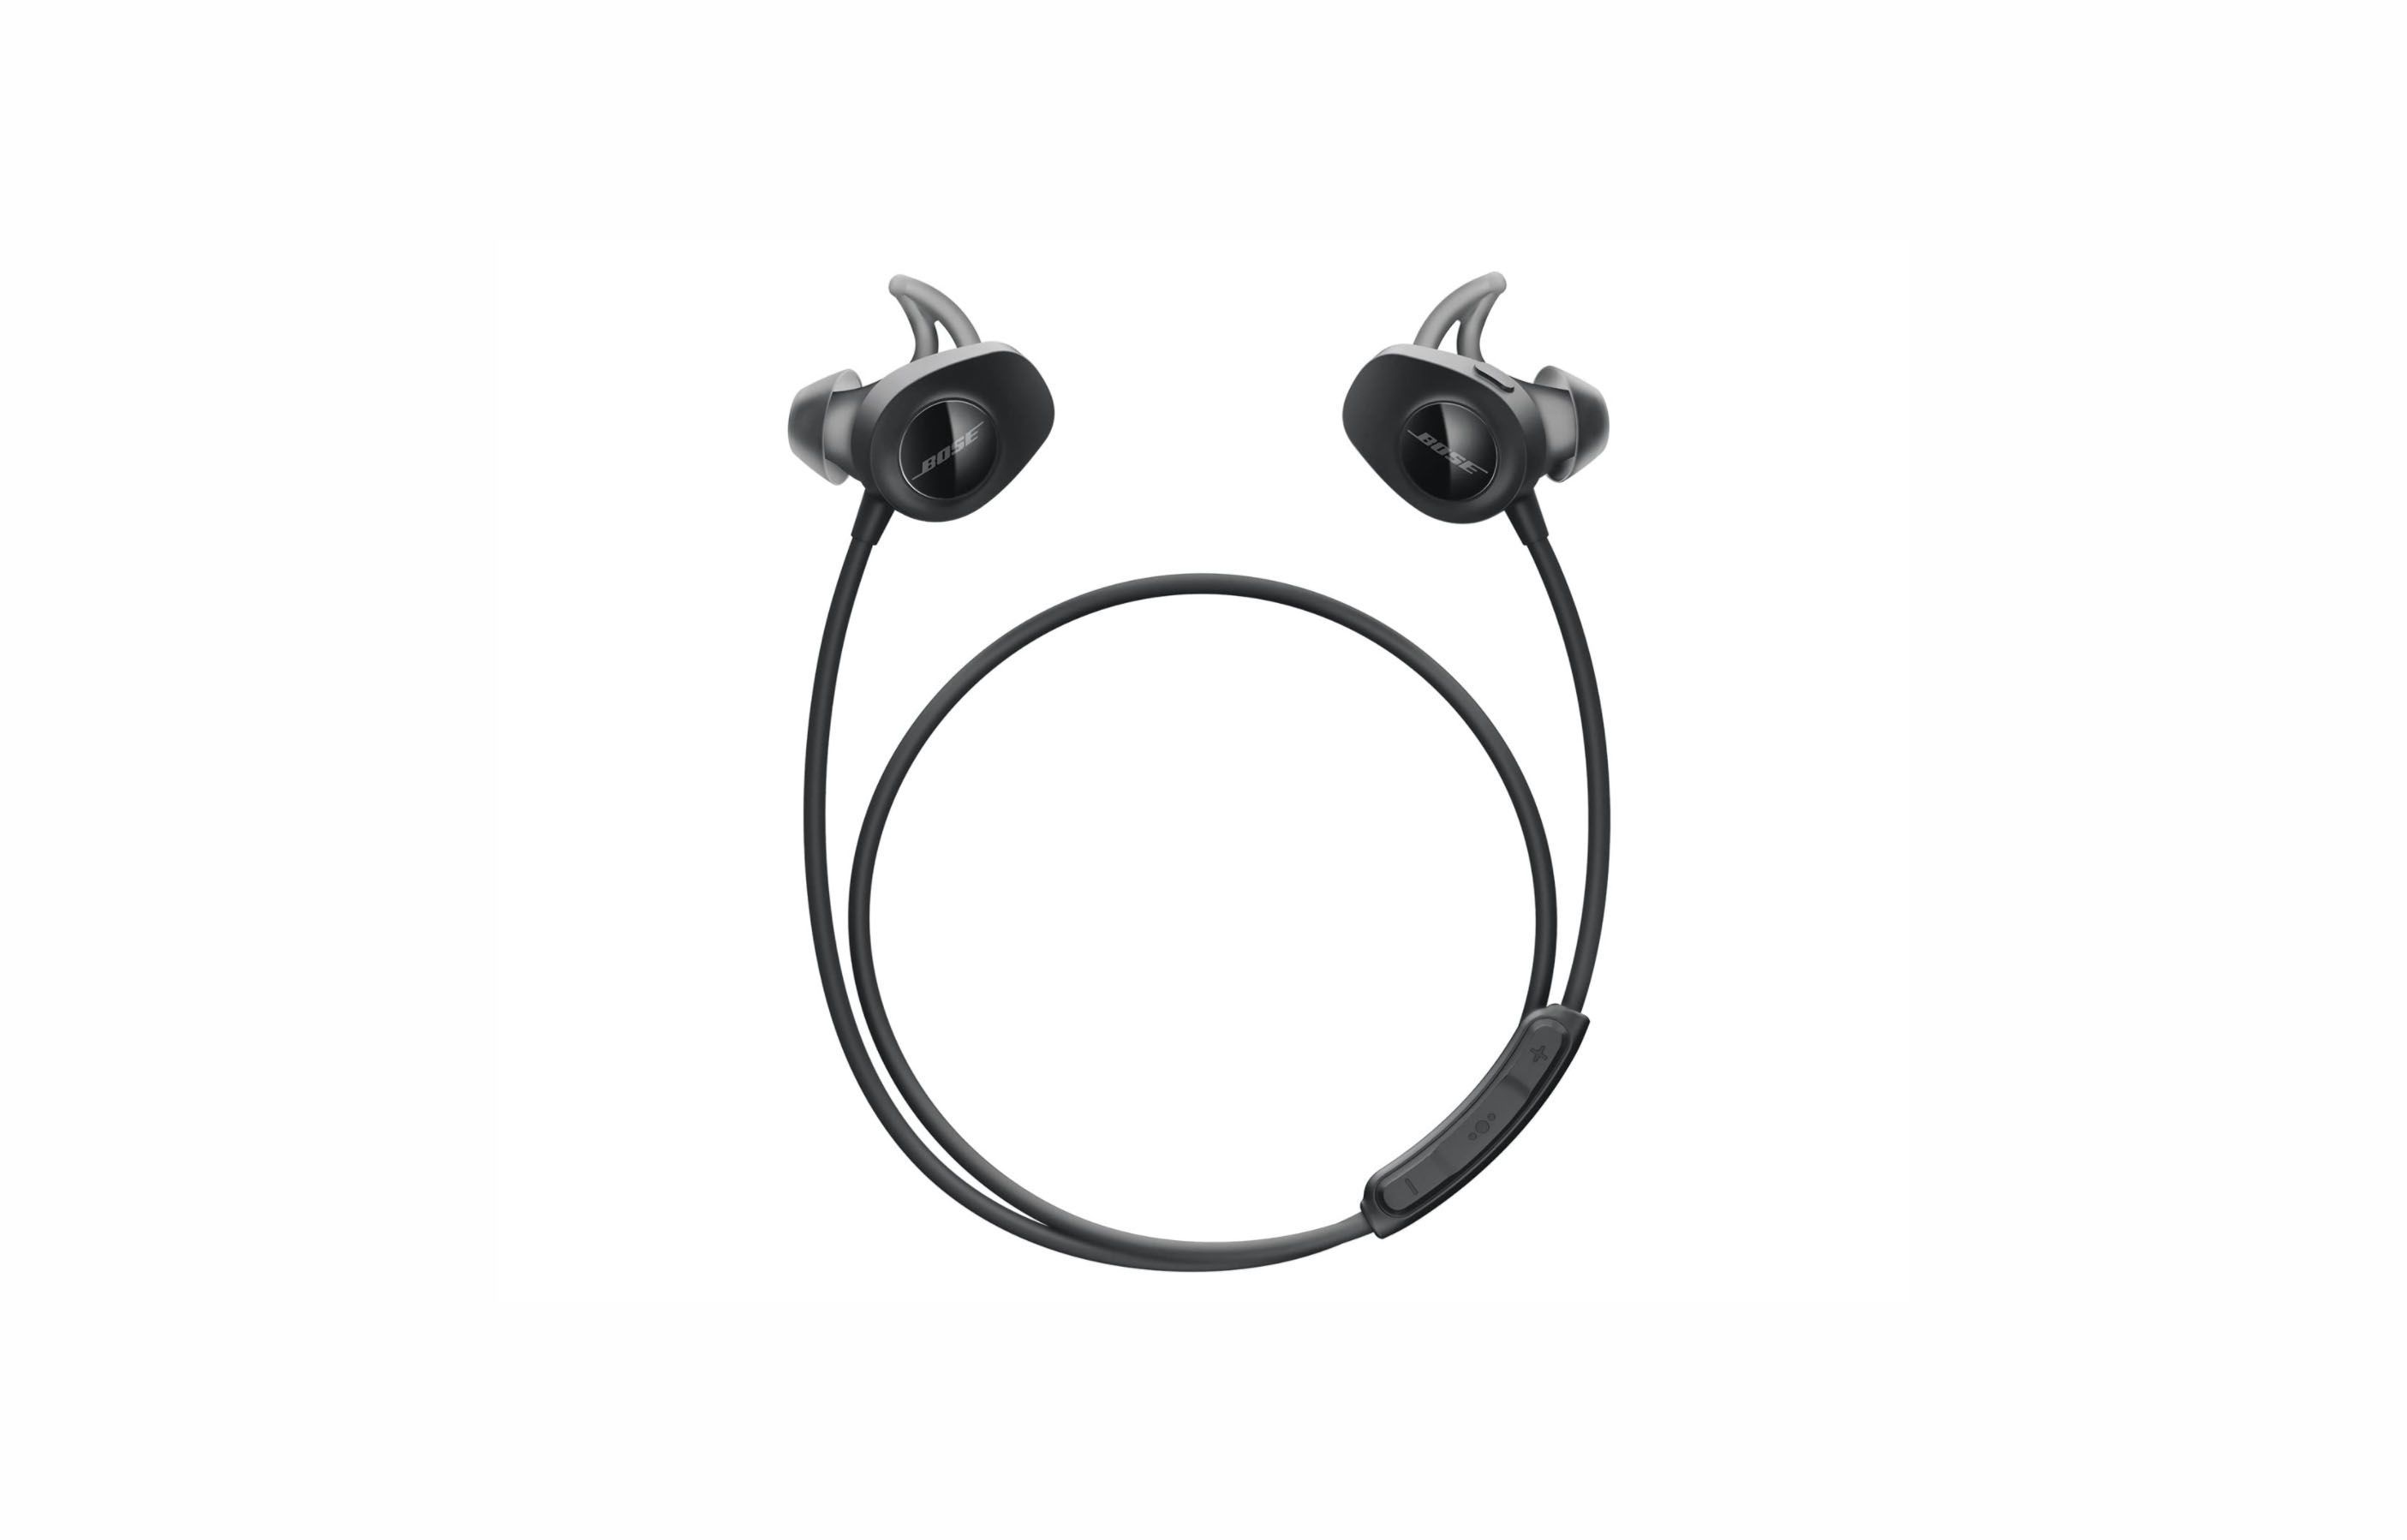 SoundSport Earbuds